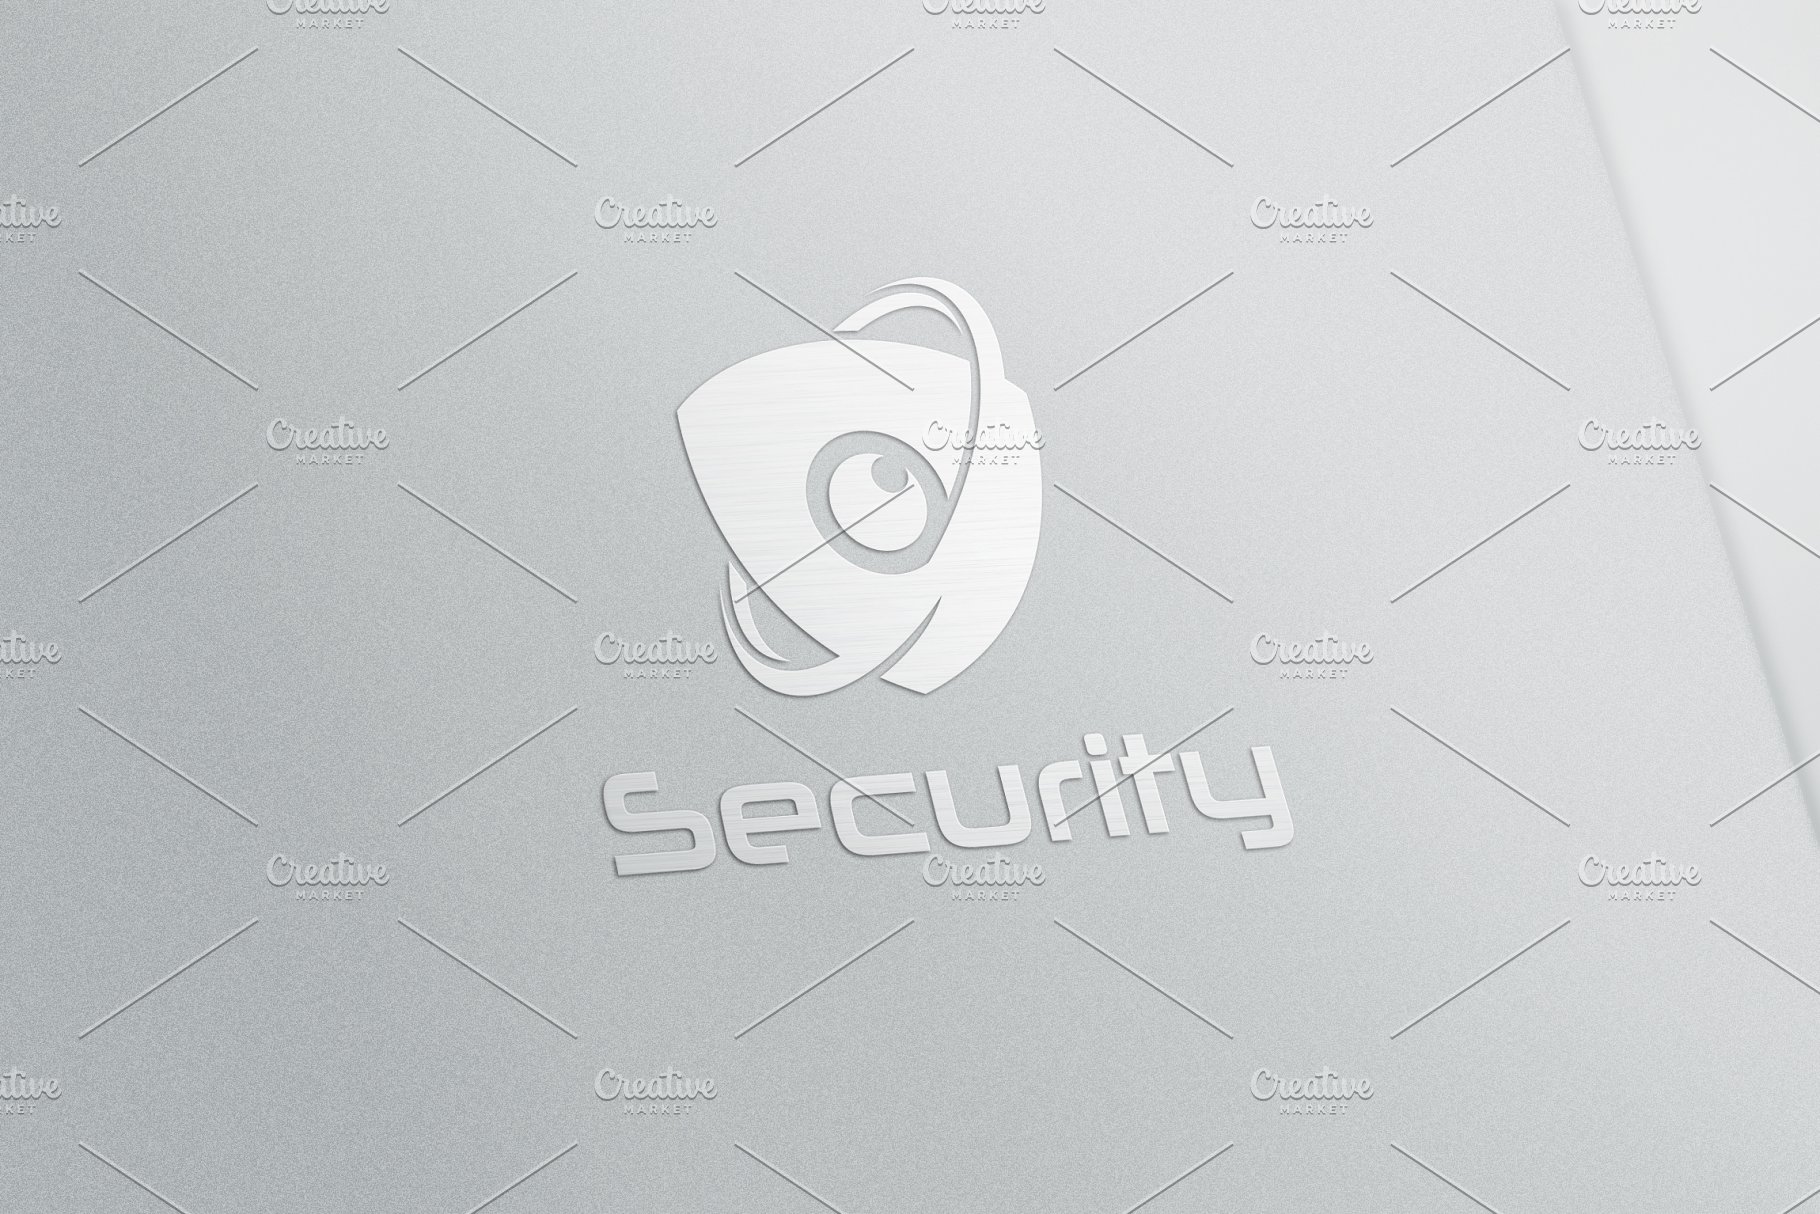 互联网系统安全主题标志Logo模板 Security-Log